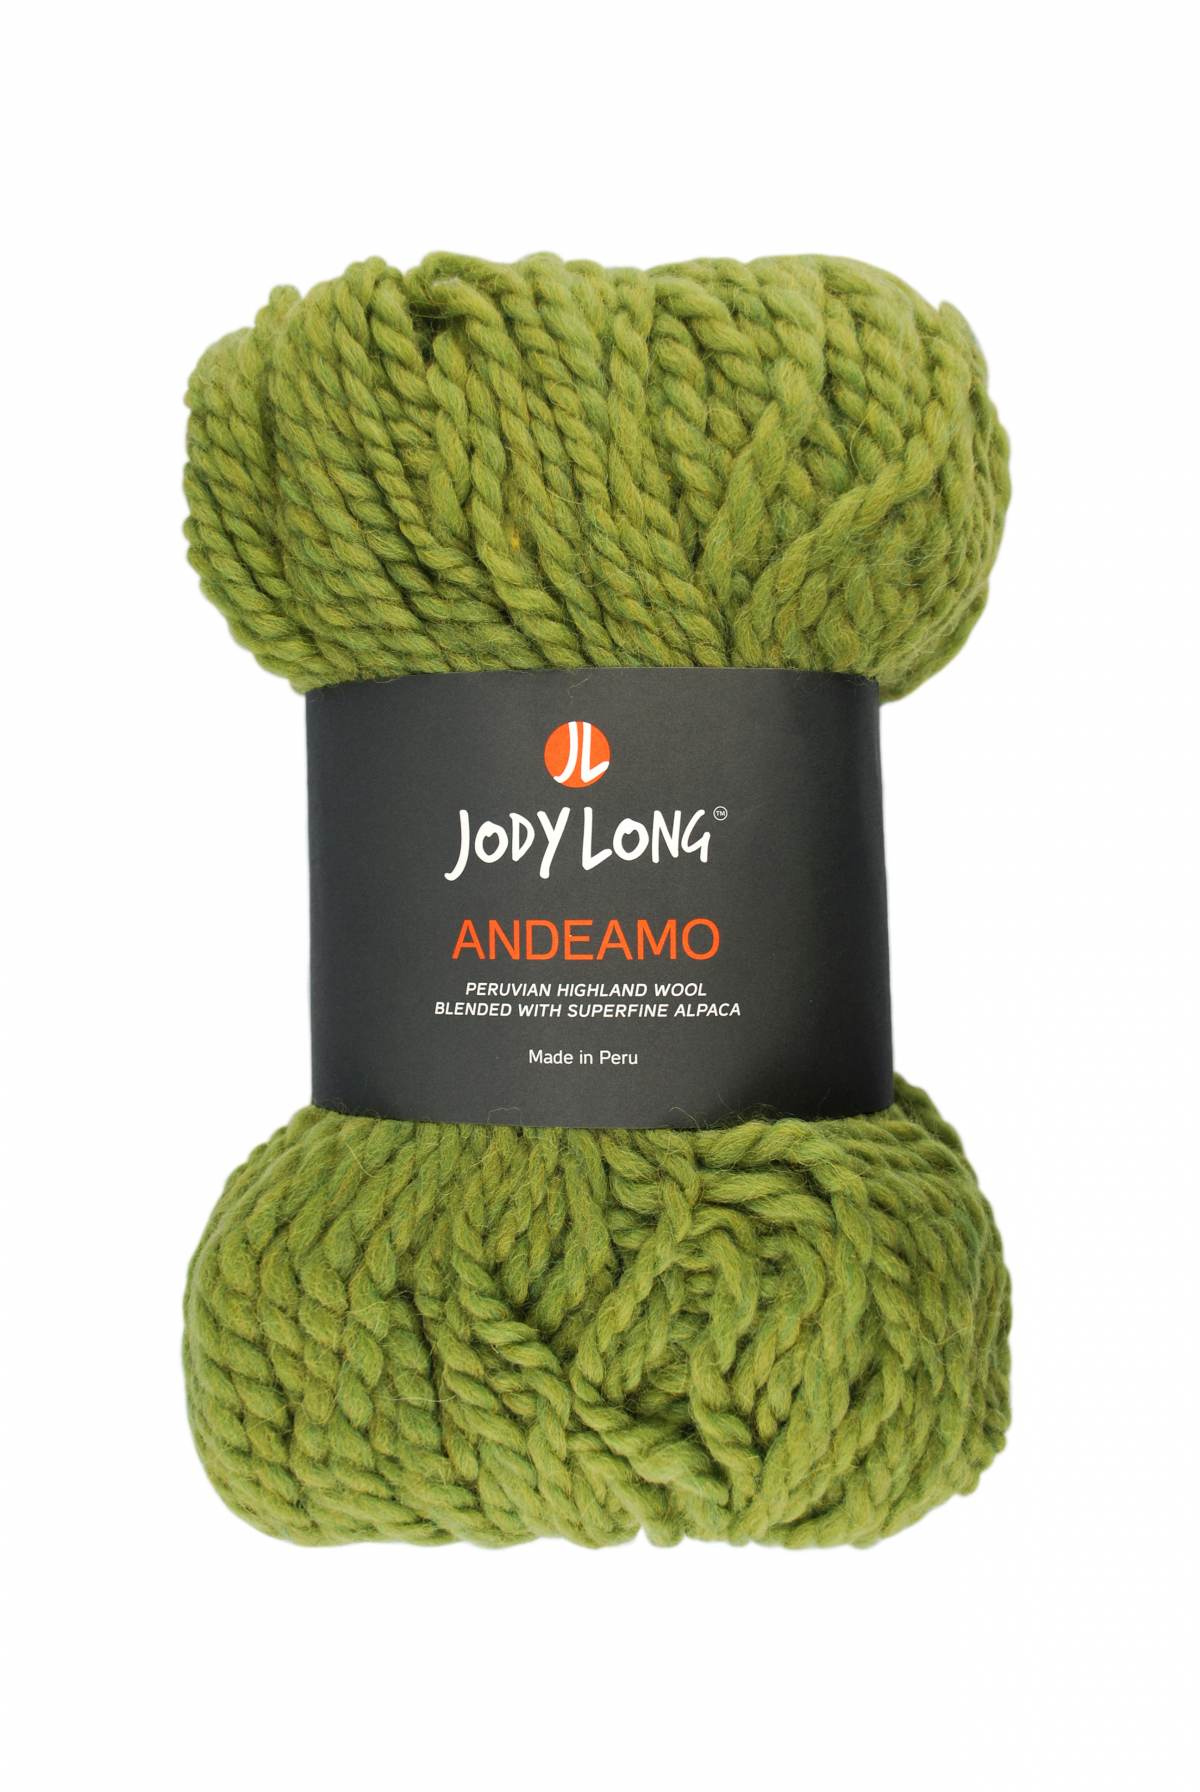  Skein of Jody Long Andeamo Yarn - 005 Evergreen